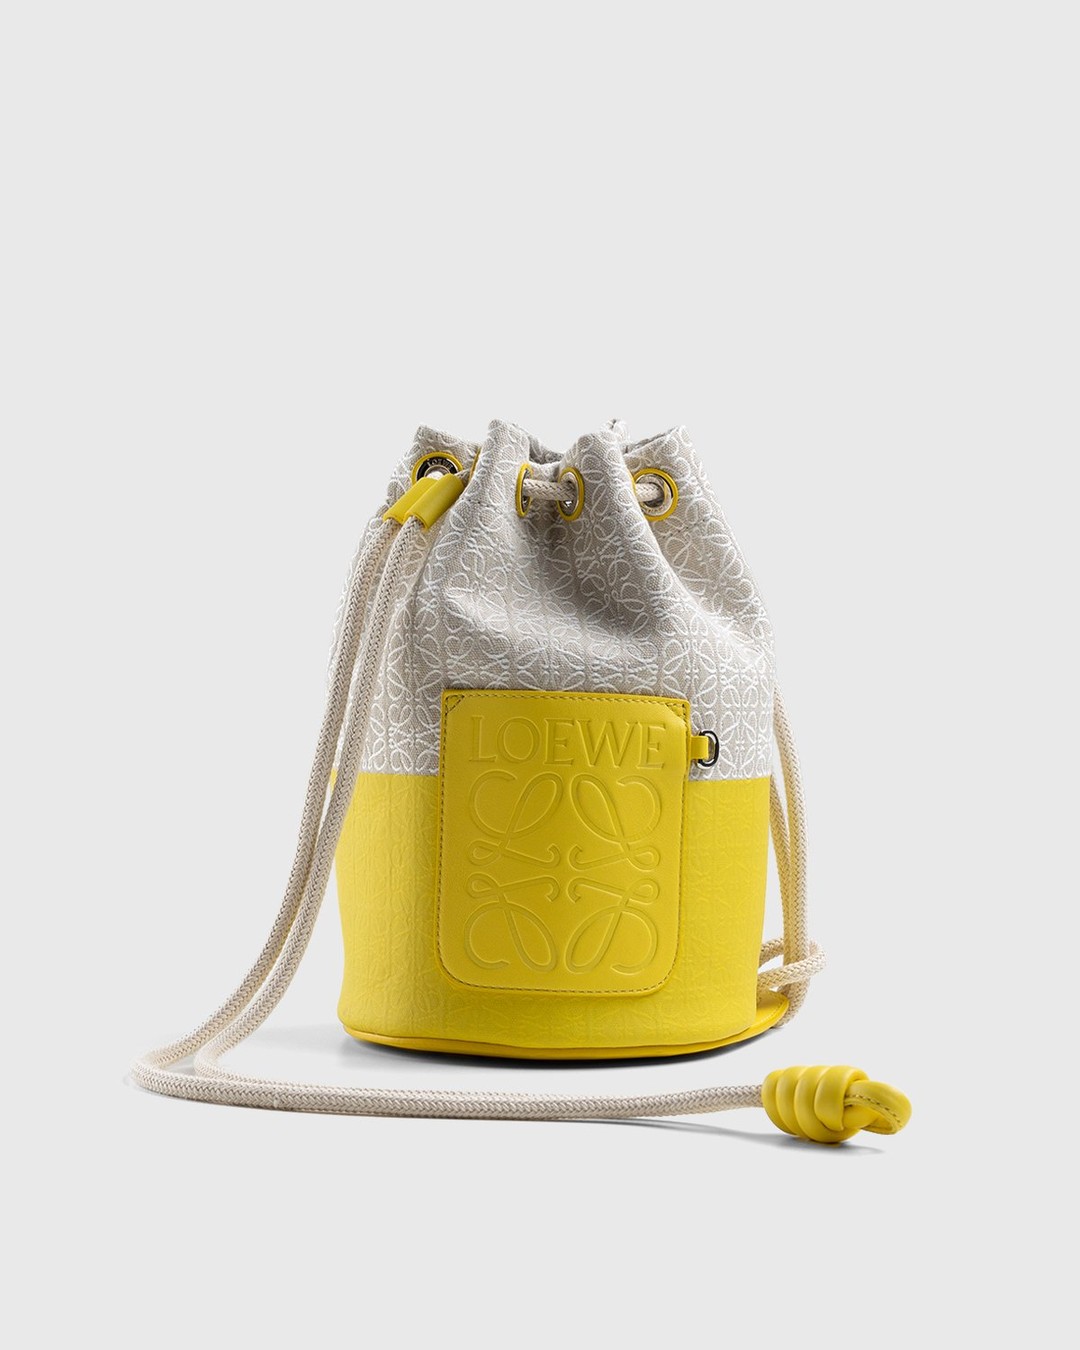 Loewe – Paula's Ibiza Small Sailor Bag Ecru/Lemon - Shoulder Bags - Yellow - Image 1